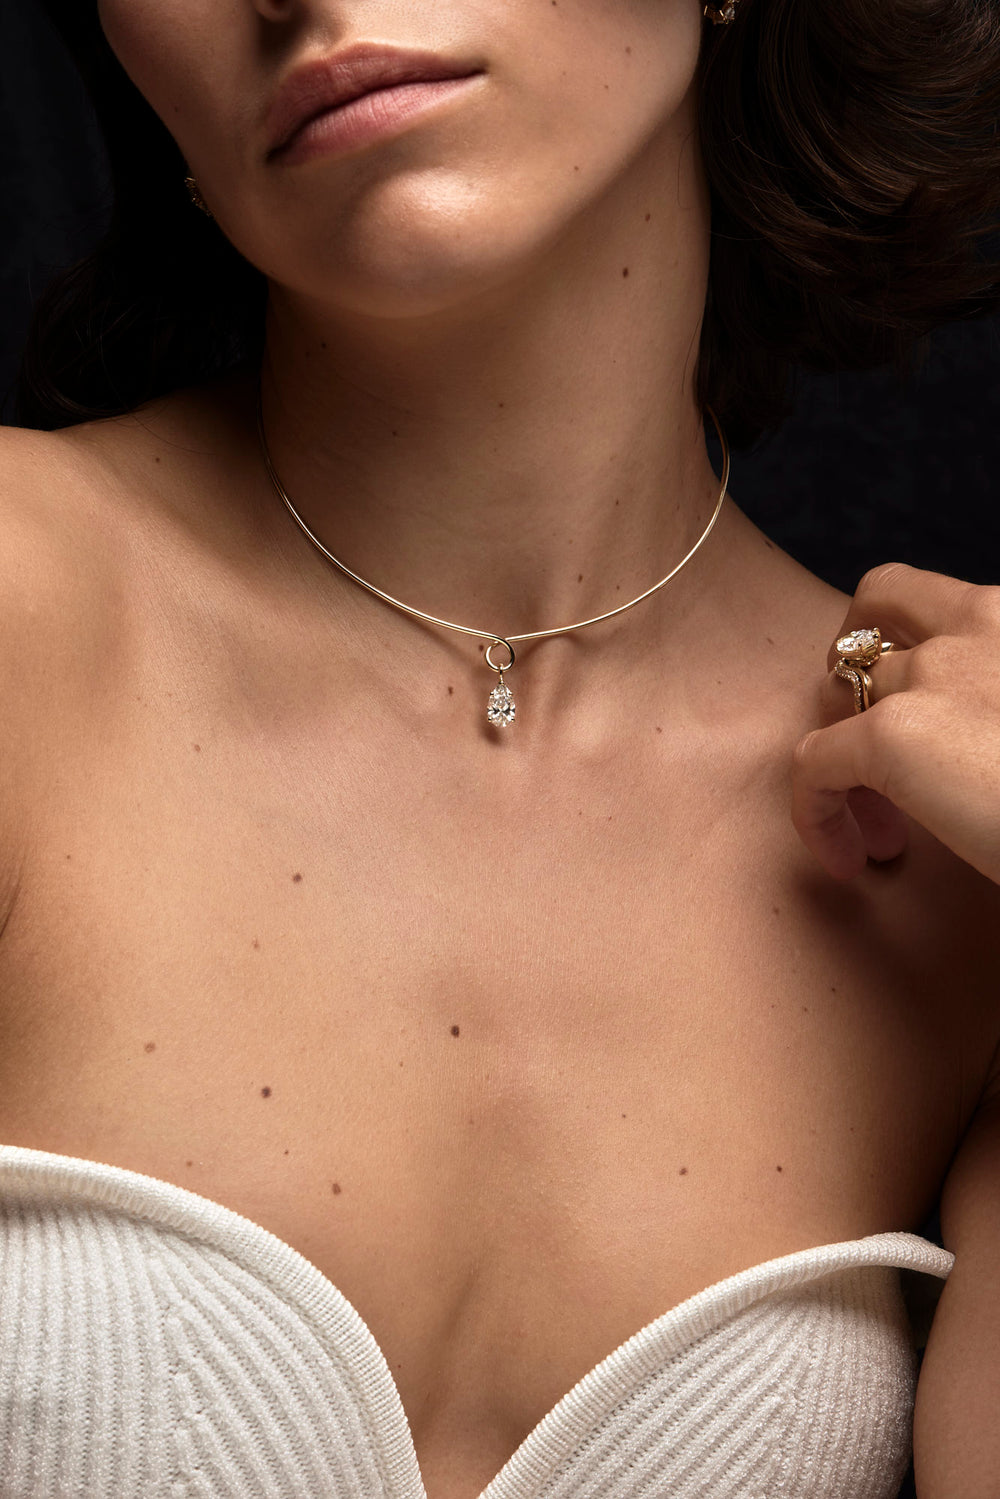 Omega Loop Necklace with Diamond | 18K Yellow Gold| Natasha Schweitzer